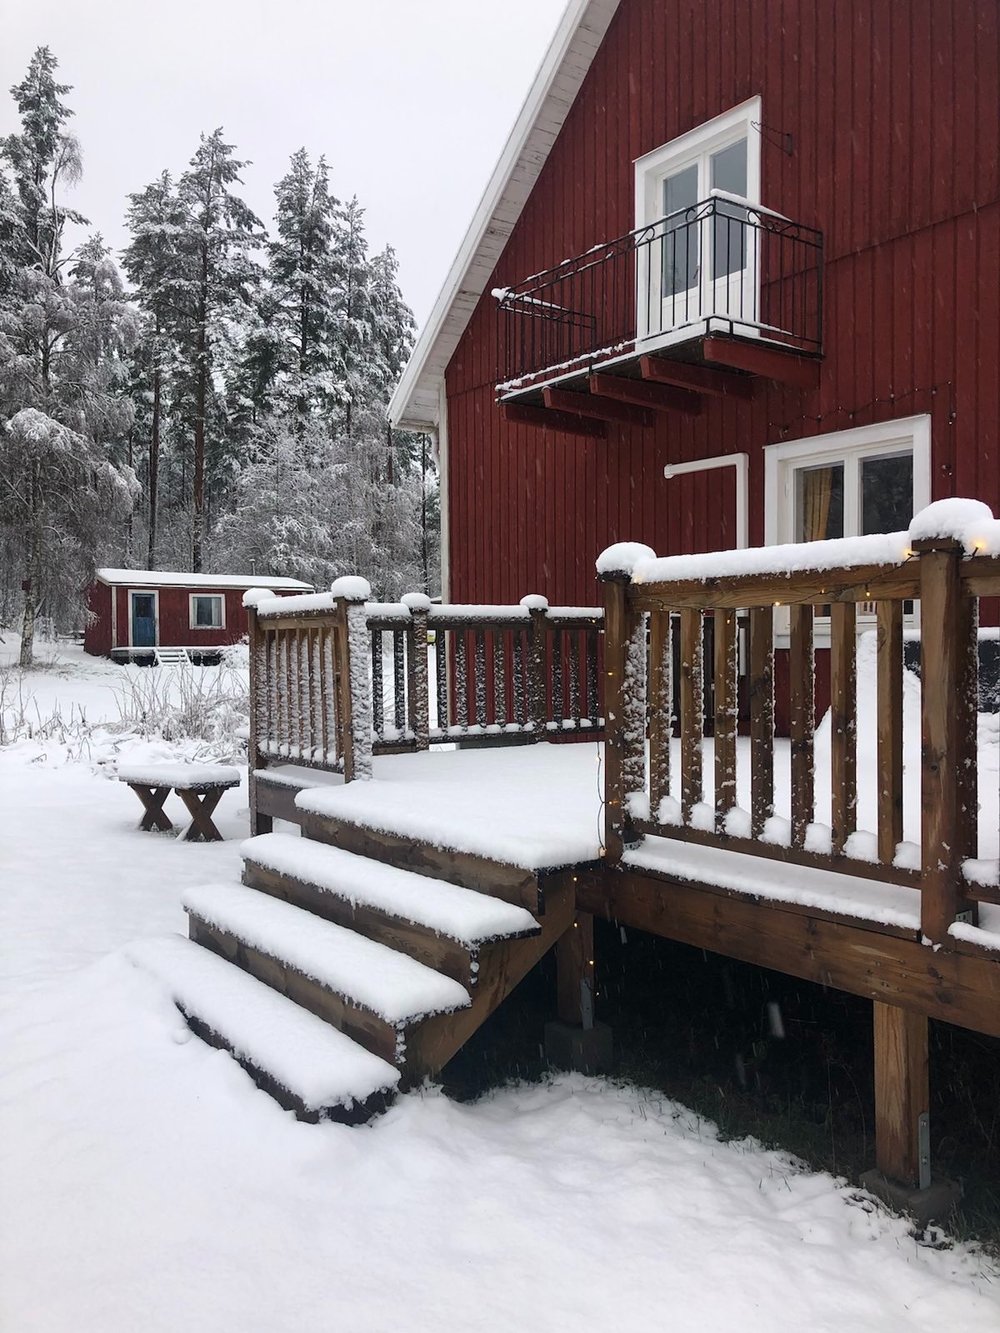 Nadia's beautiful home in Sweden. Photo: Nadia Henderson